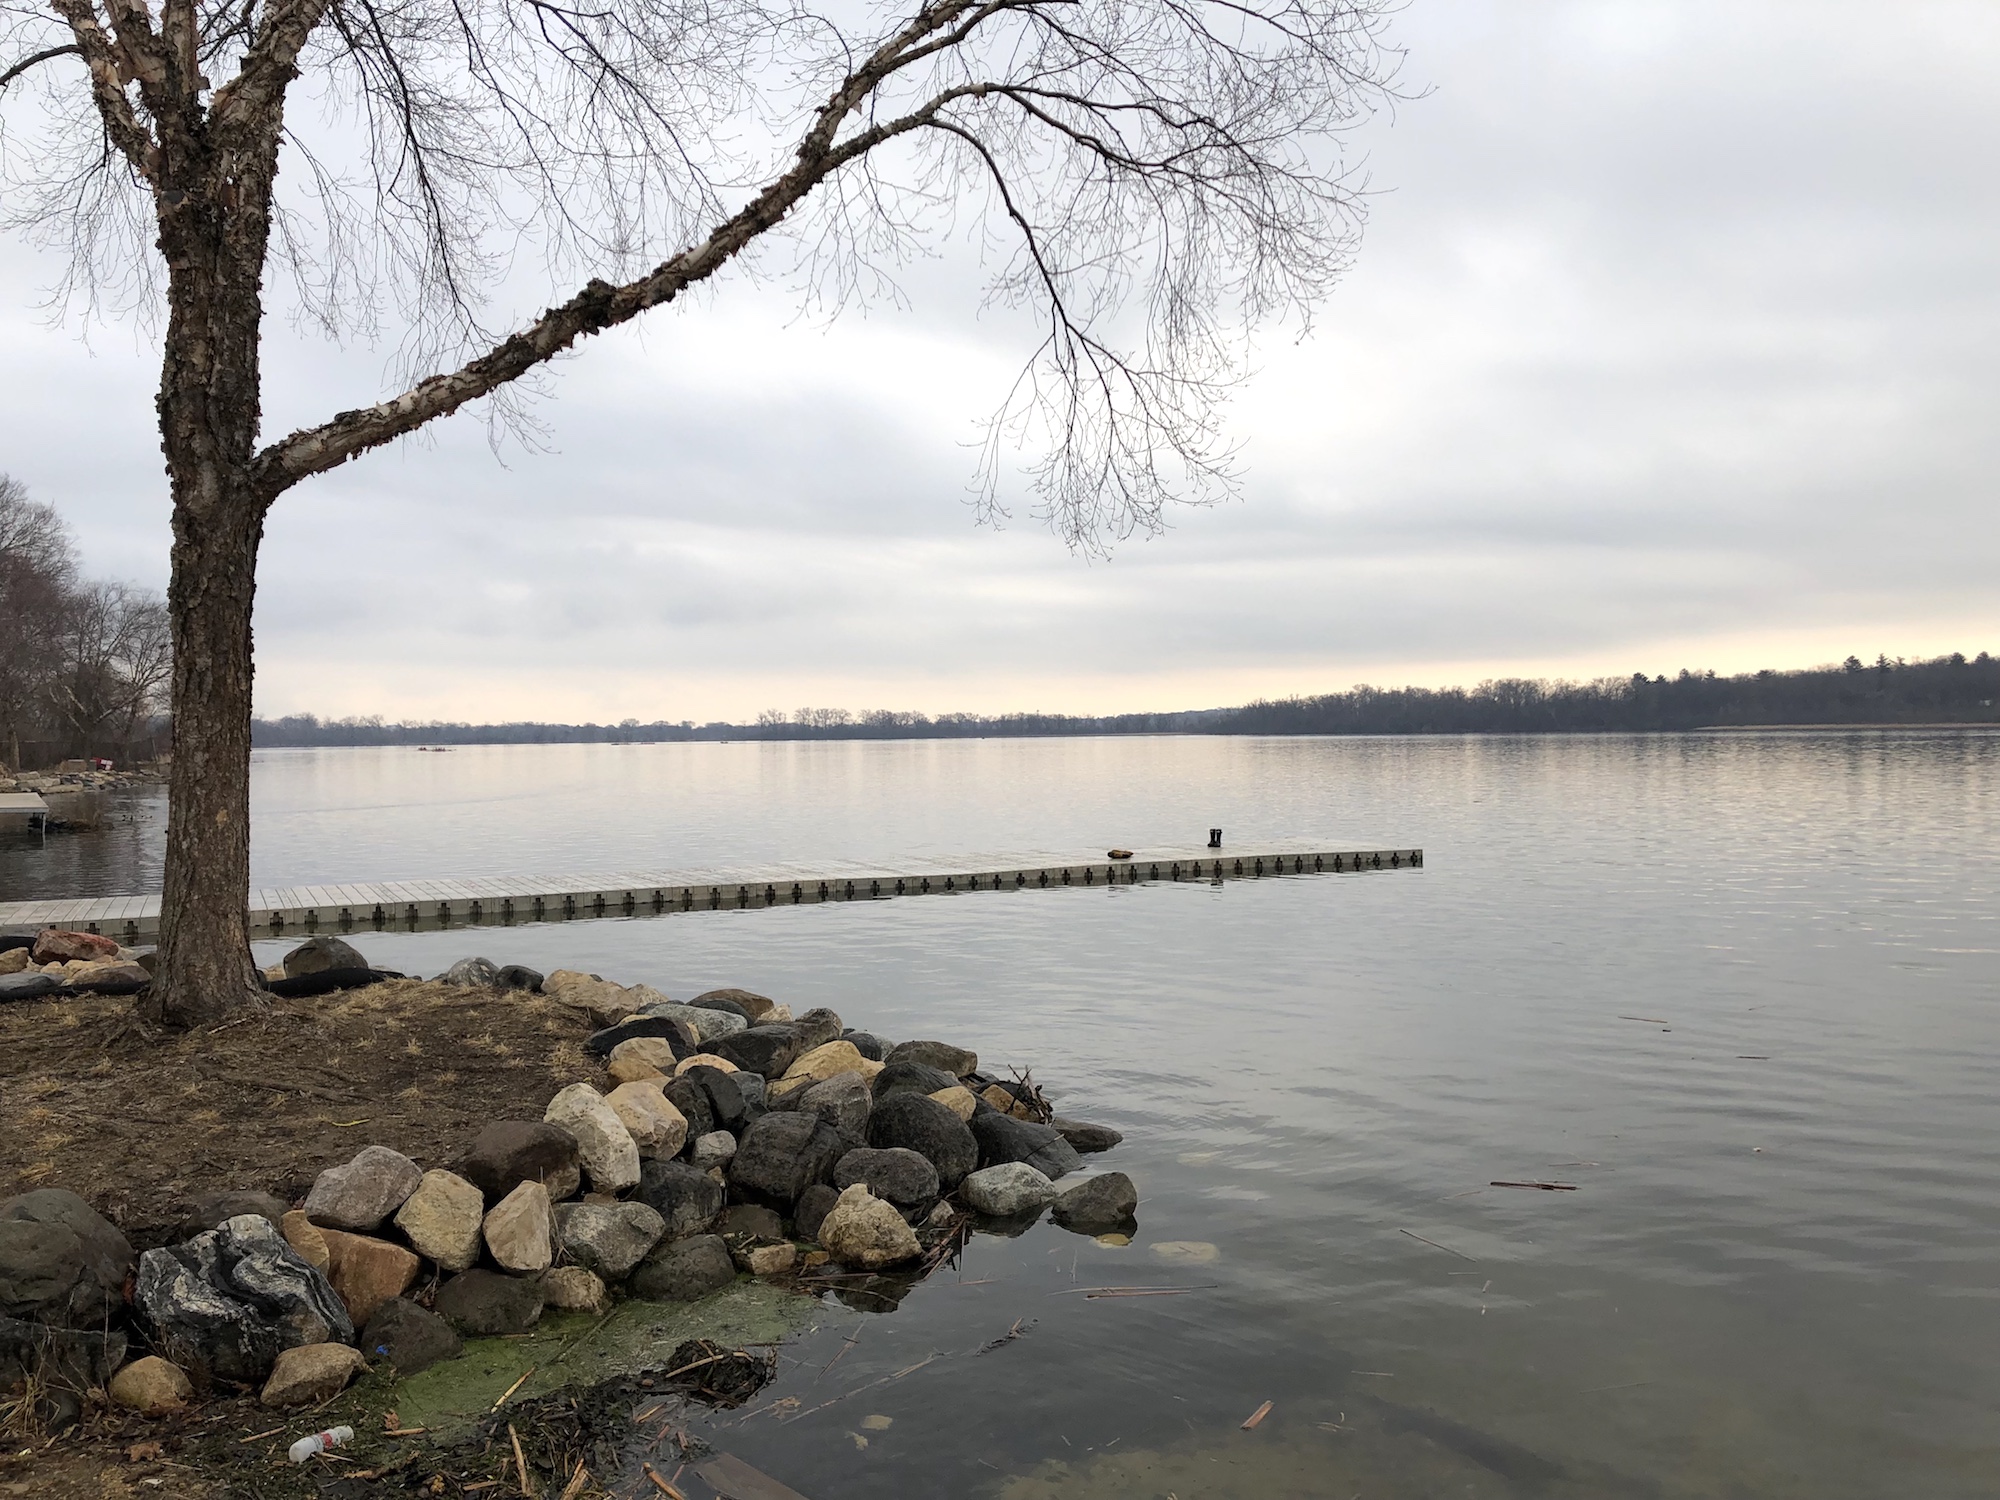 Lake Wingra on April 2, 2019.